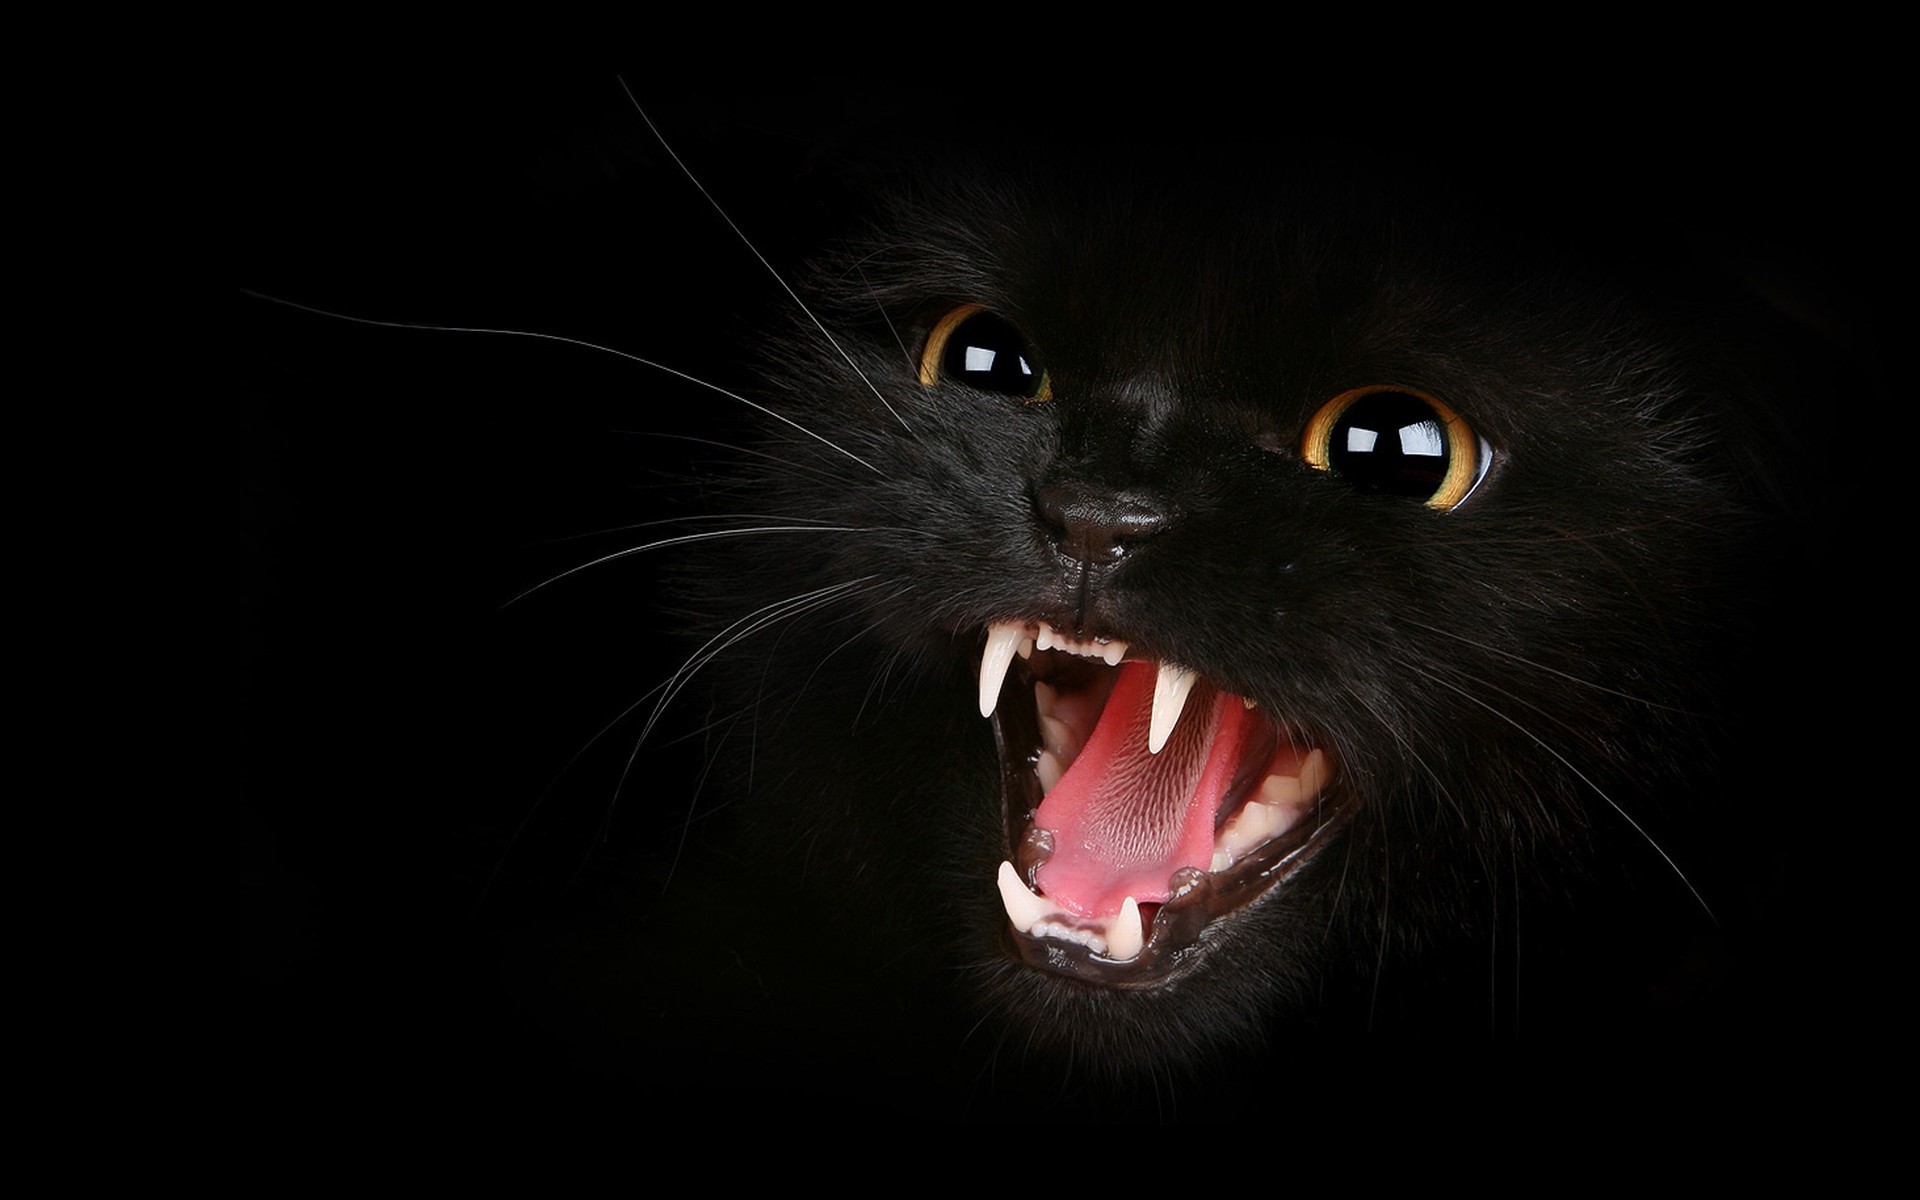 General 1920x1200 animals cats mammals dark eyes teeth black background fangs animal eyes black cats